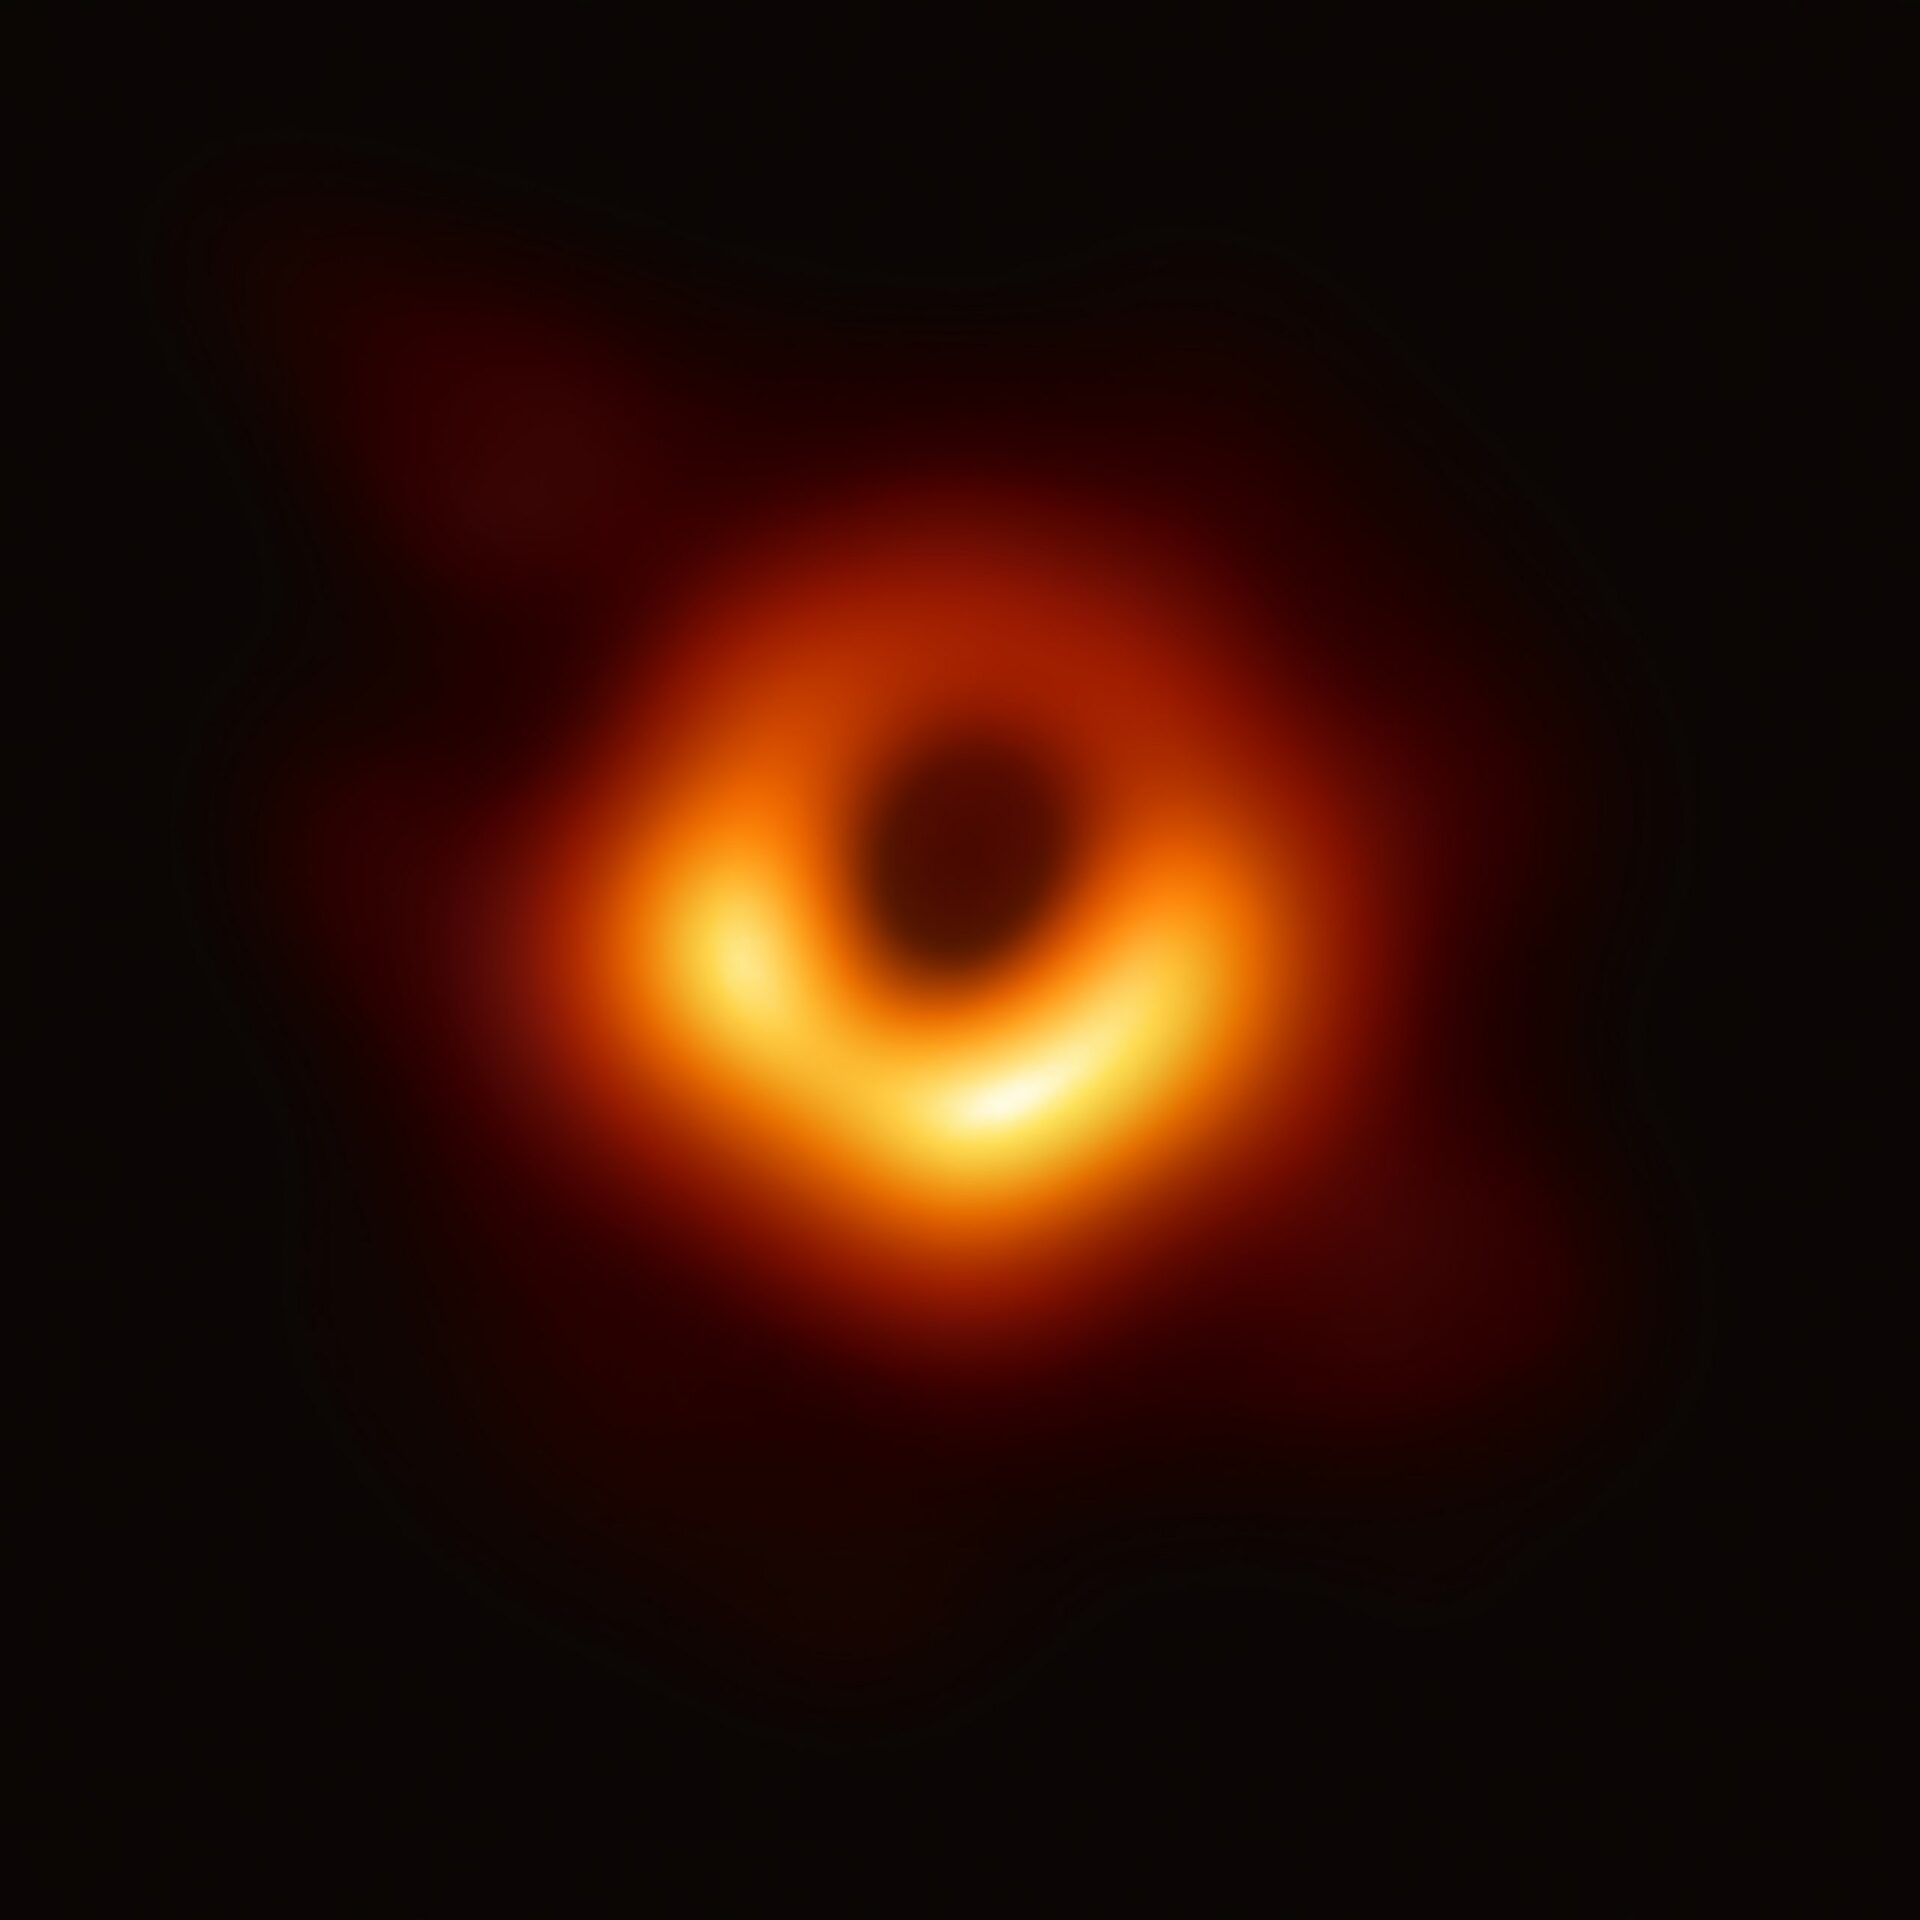 [Colloquium] 2022.3.16.(WED) / Prof. Donghui Jeong (Pennsylvania State Univ.) / Searching for dark-matter black holes from LVK gravitational wave detectors